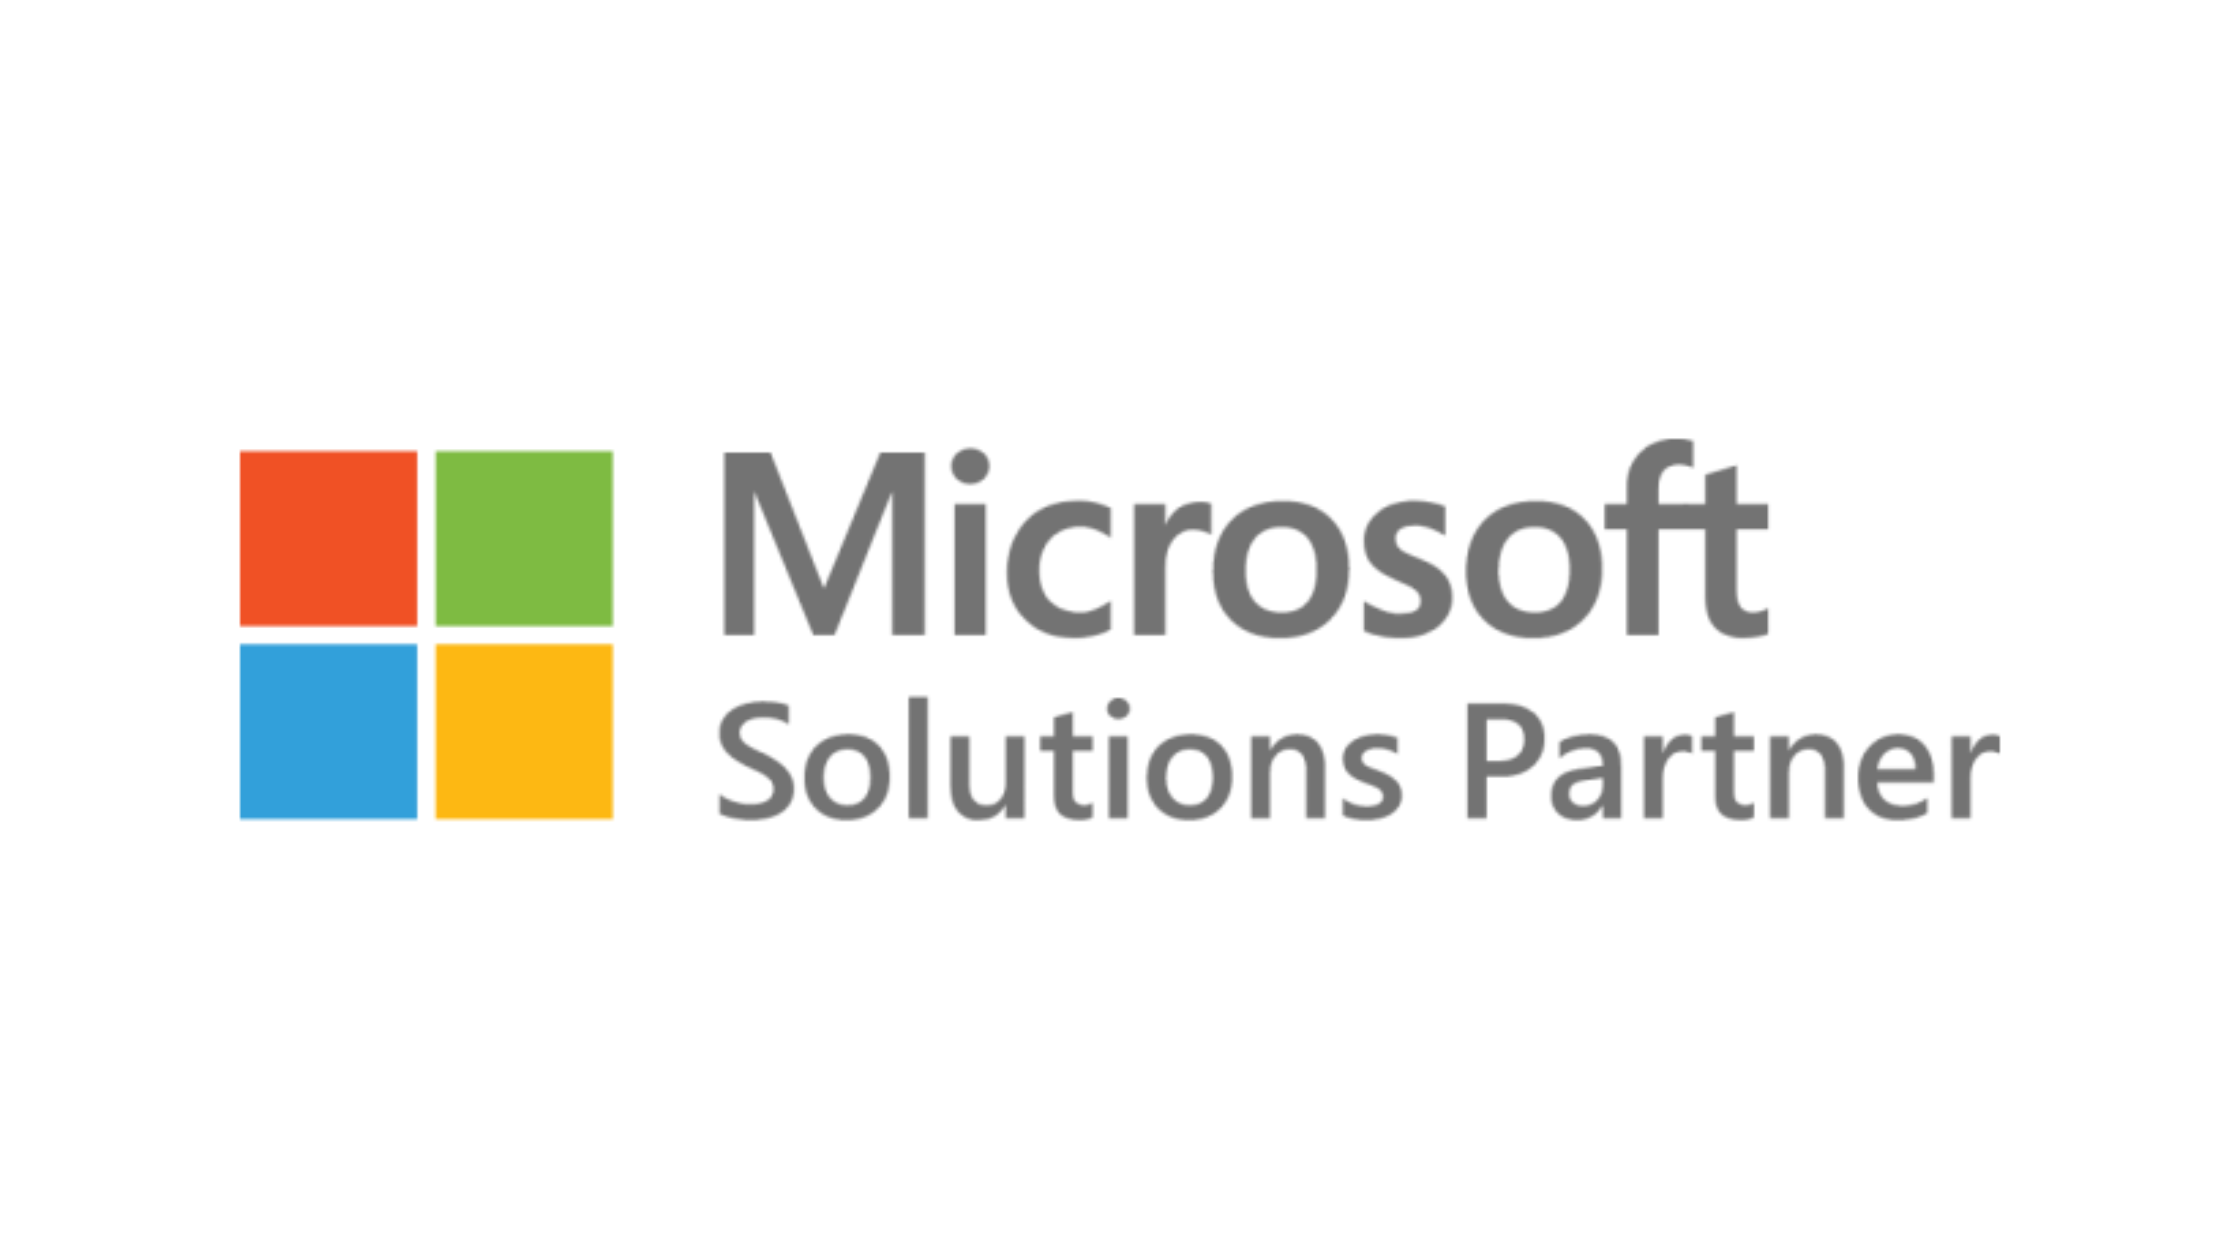 Microsoft solutions partner 